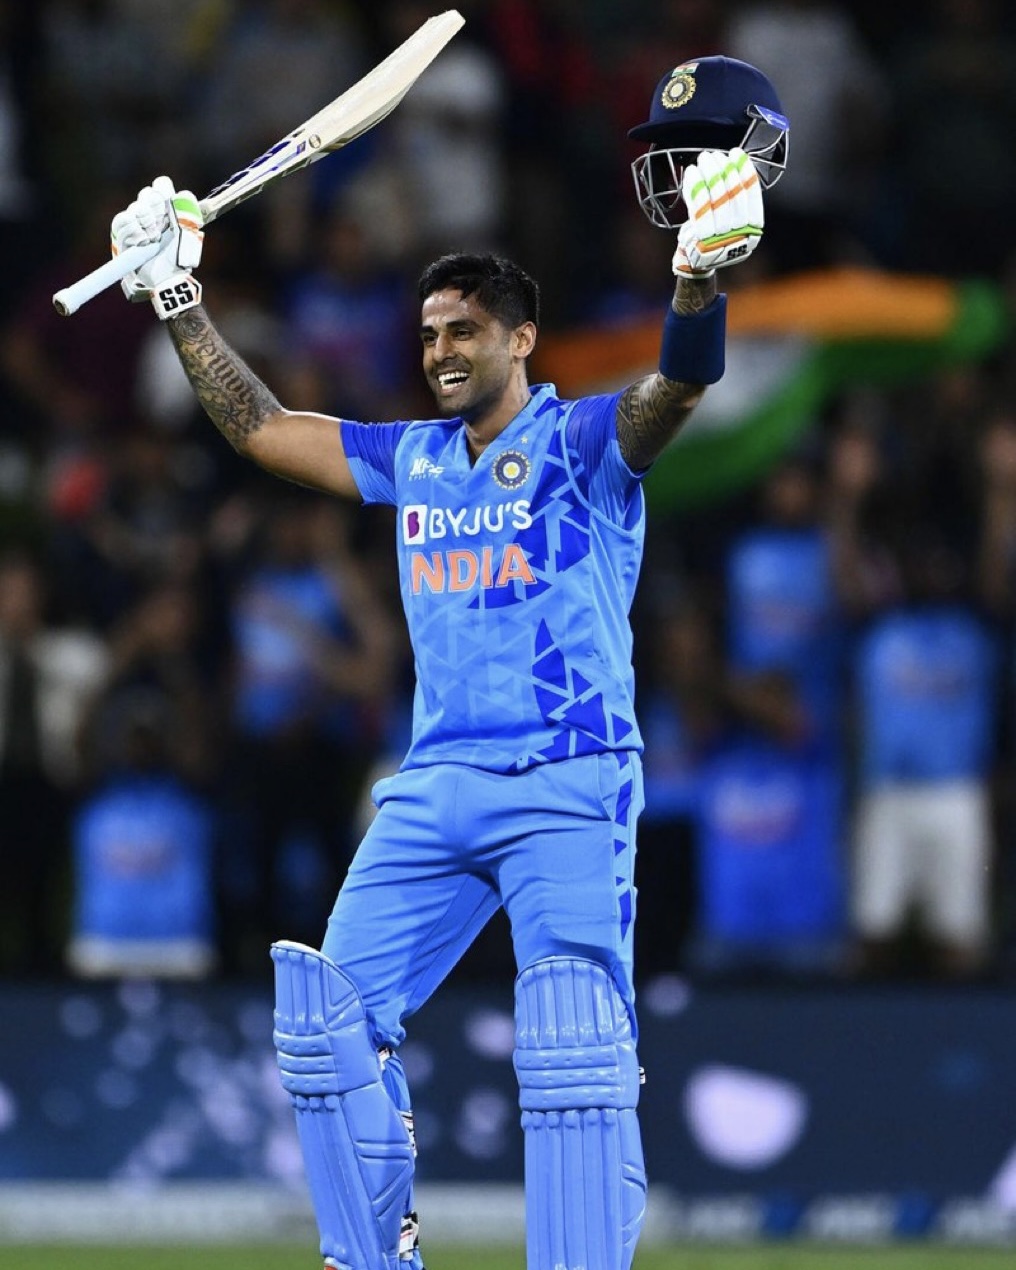 IND vs NZ ODI: World No.1 in T20Is, Suryakumar Yadav aims to nail ODI spot amid stiff competition from Sanju Samson, Deepak Hooda, India vs NewZealand ODI LIVE